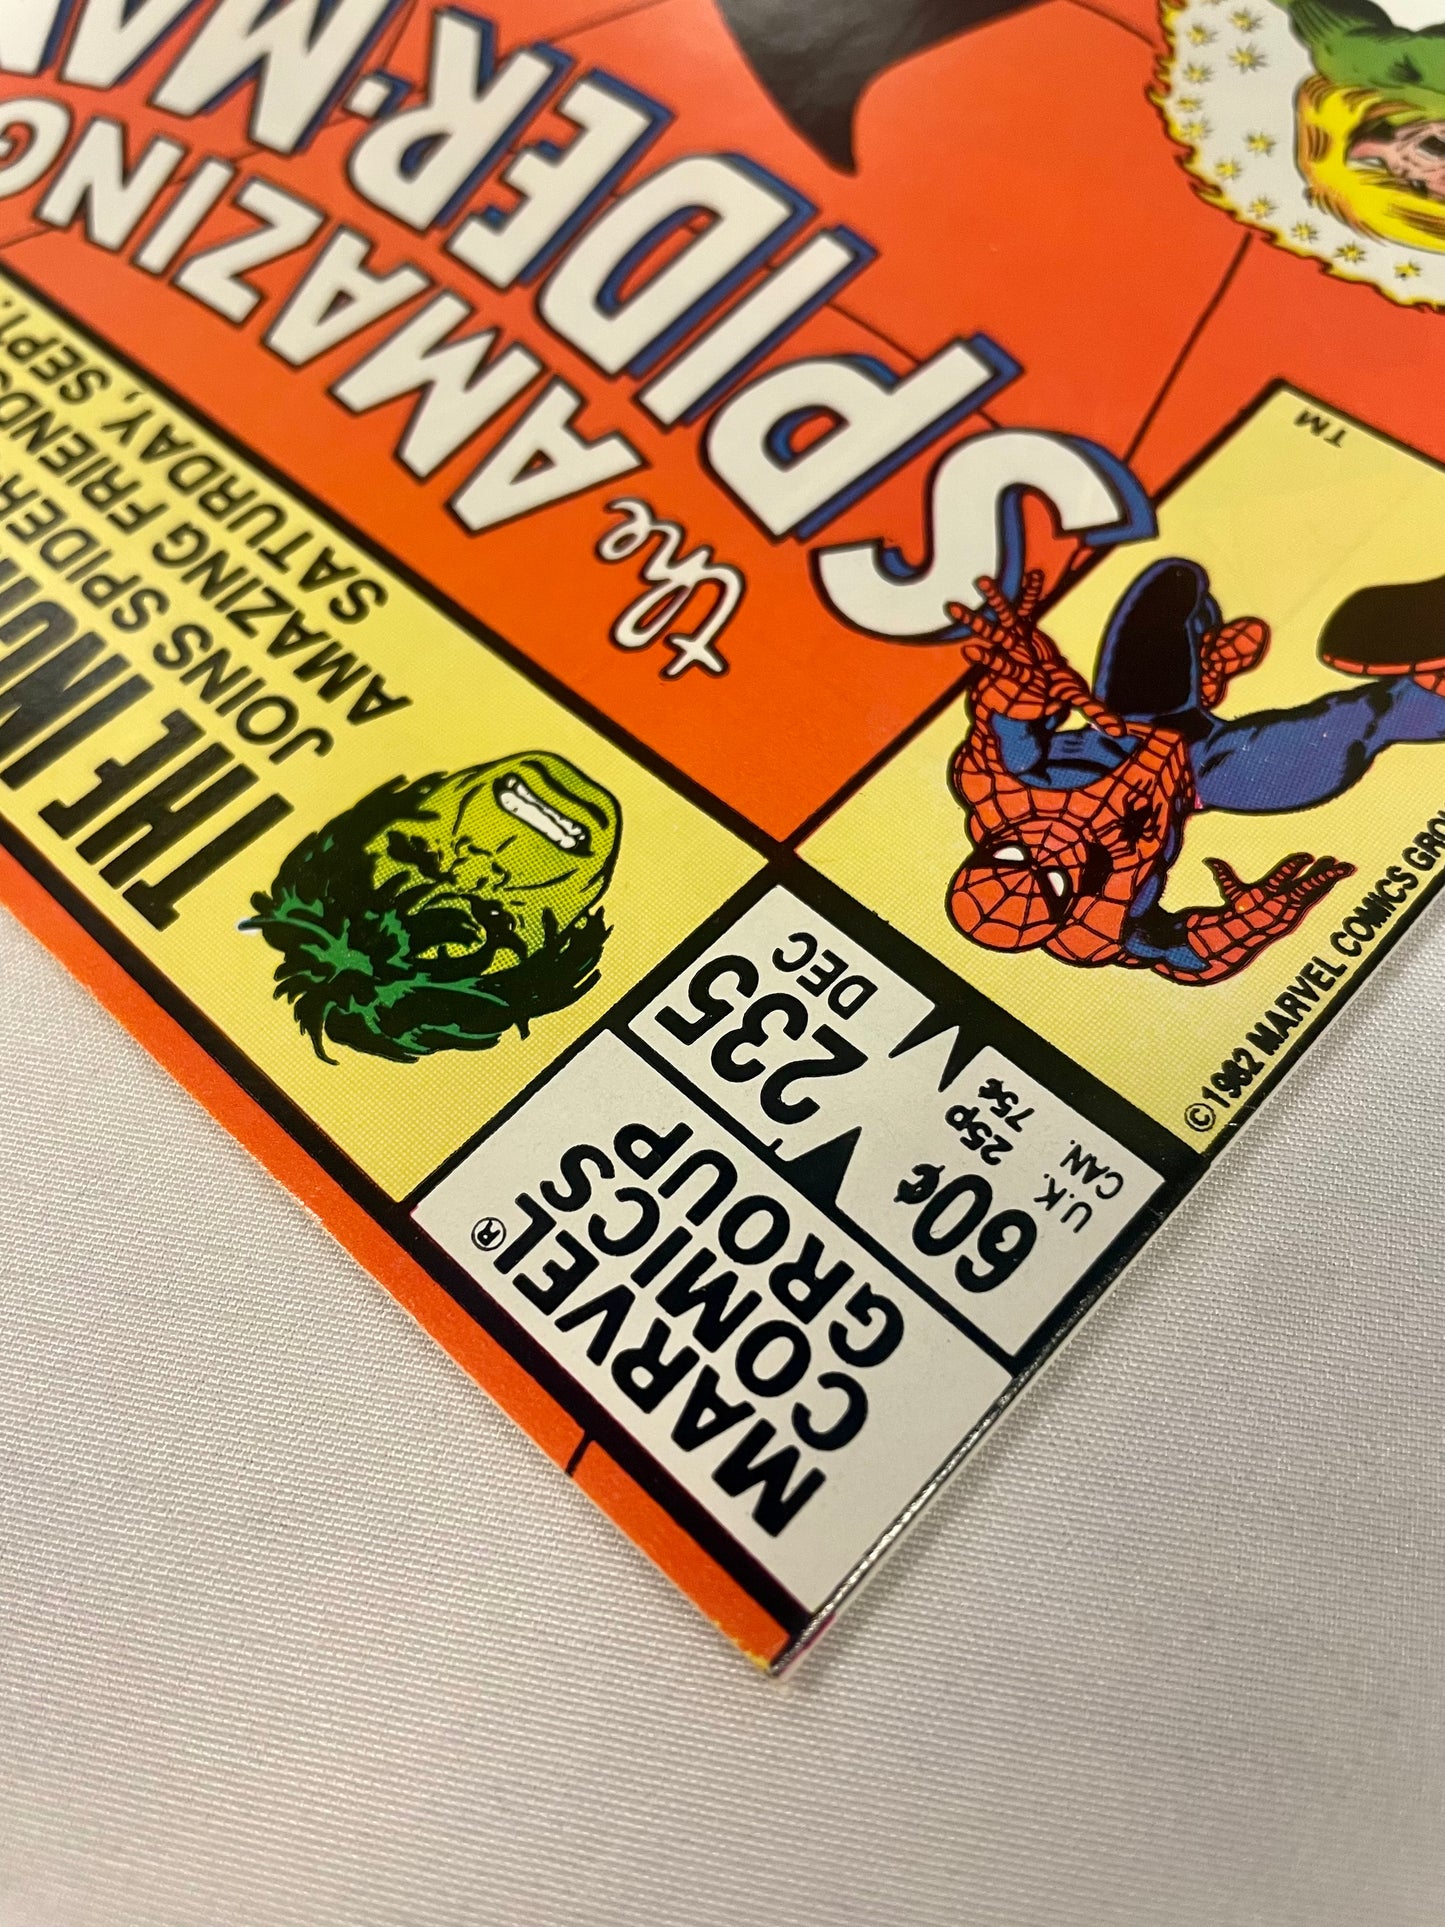 Marvel Comics: The Amazing Spider-Man #235